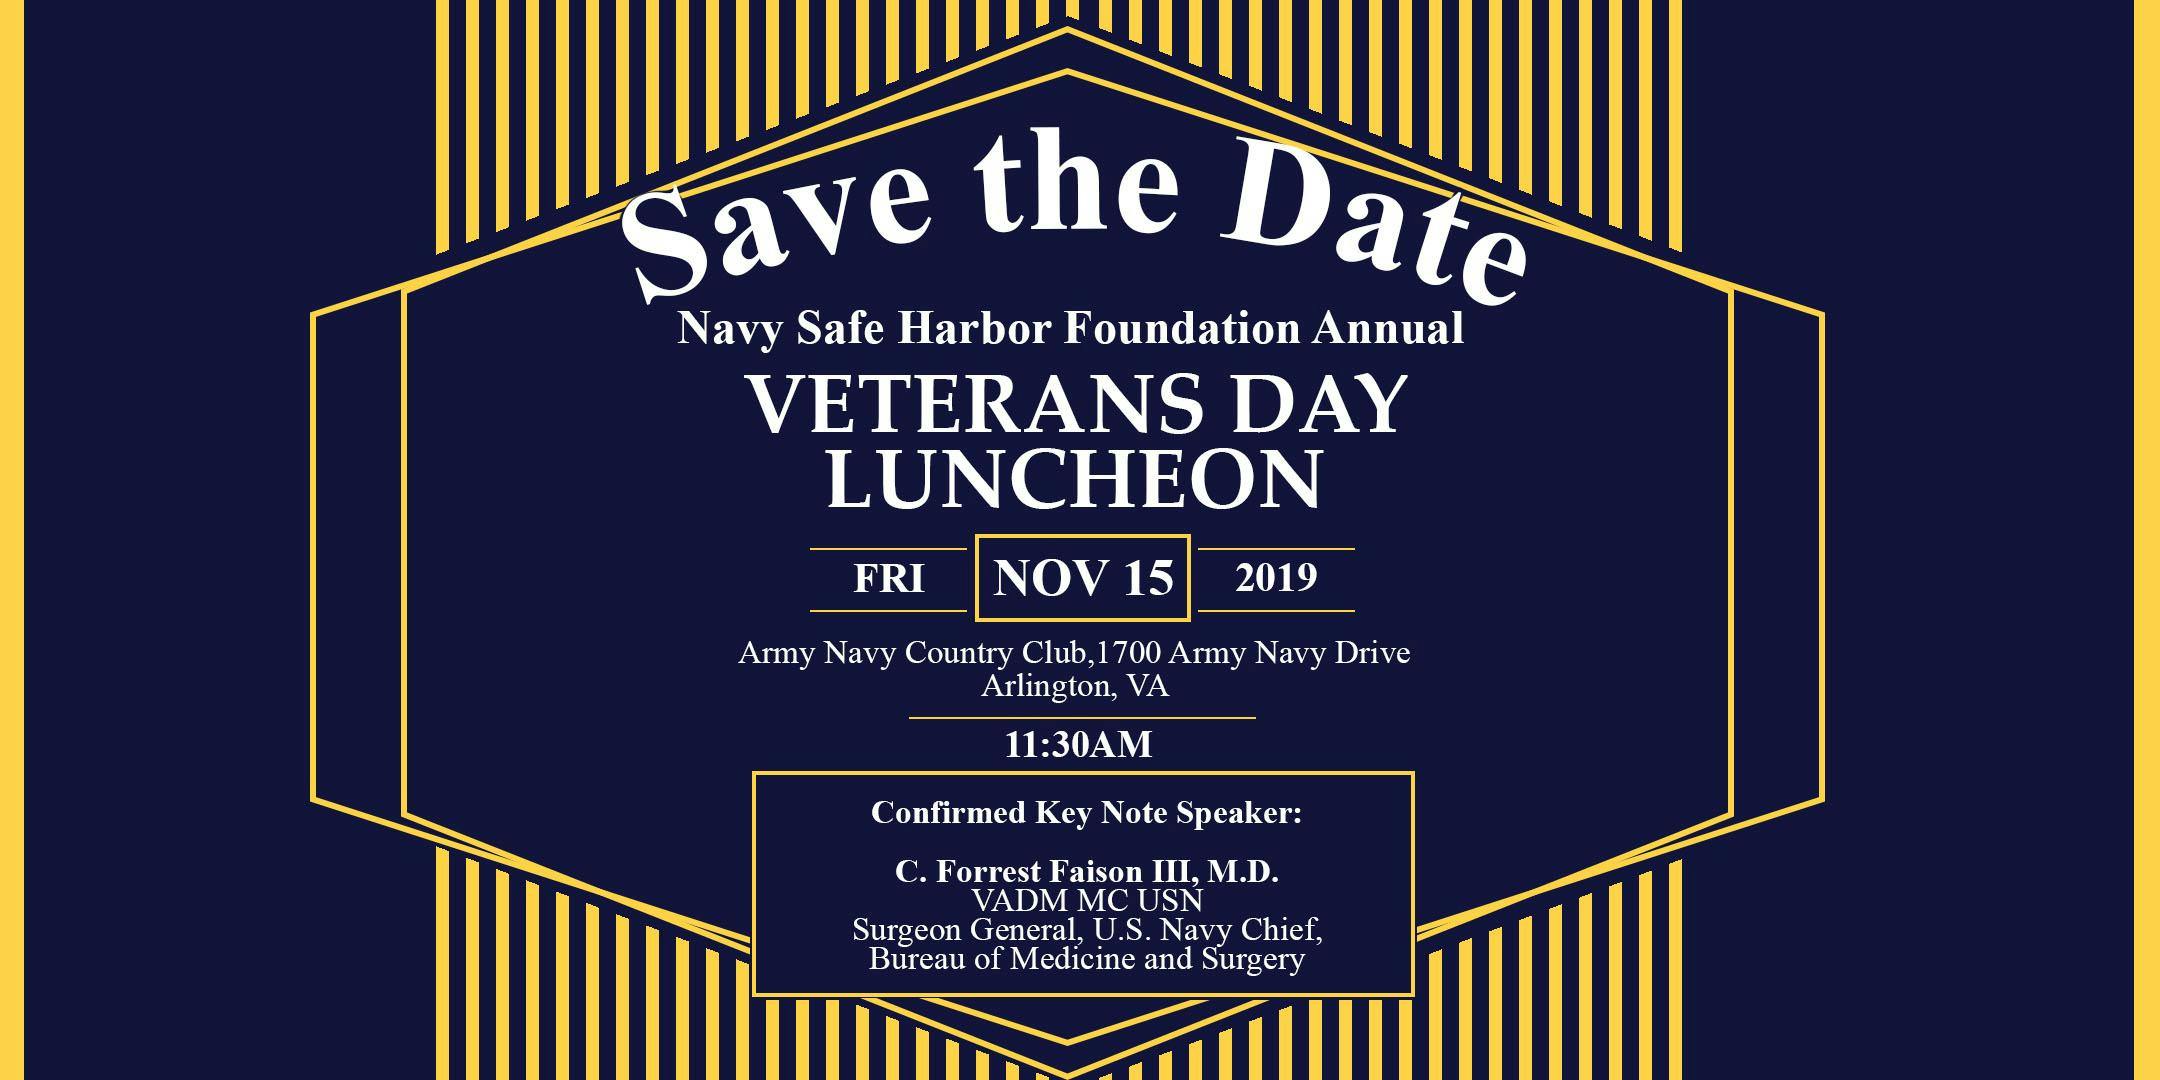 NSHF Annual Veterans Day Luncheon 2019